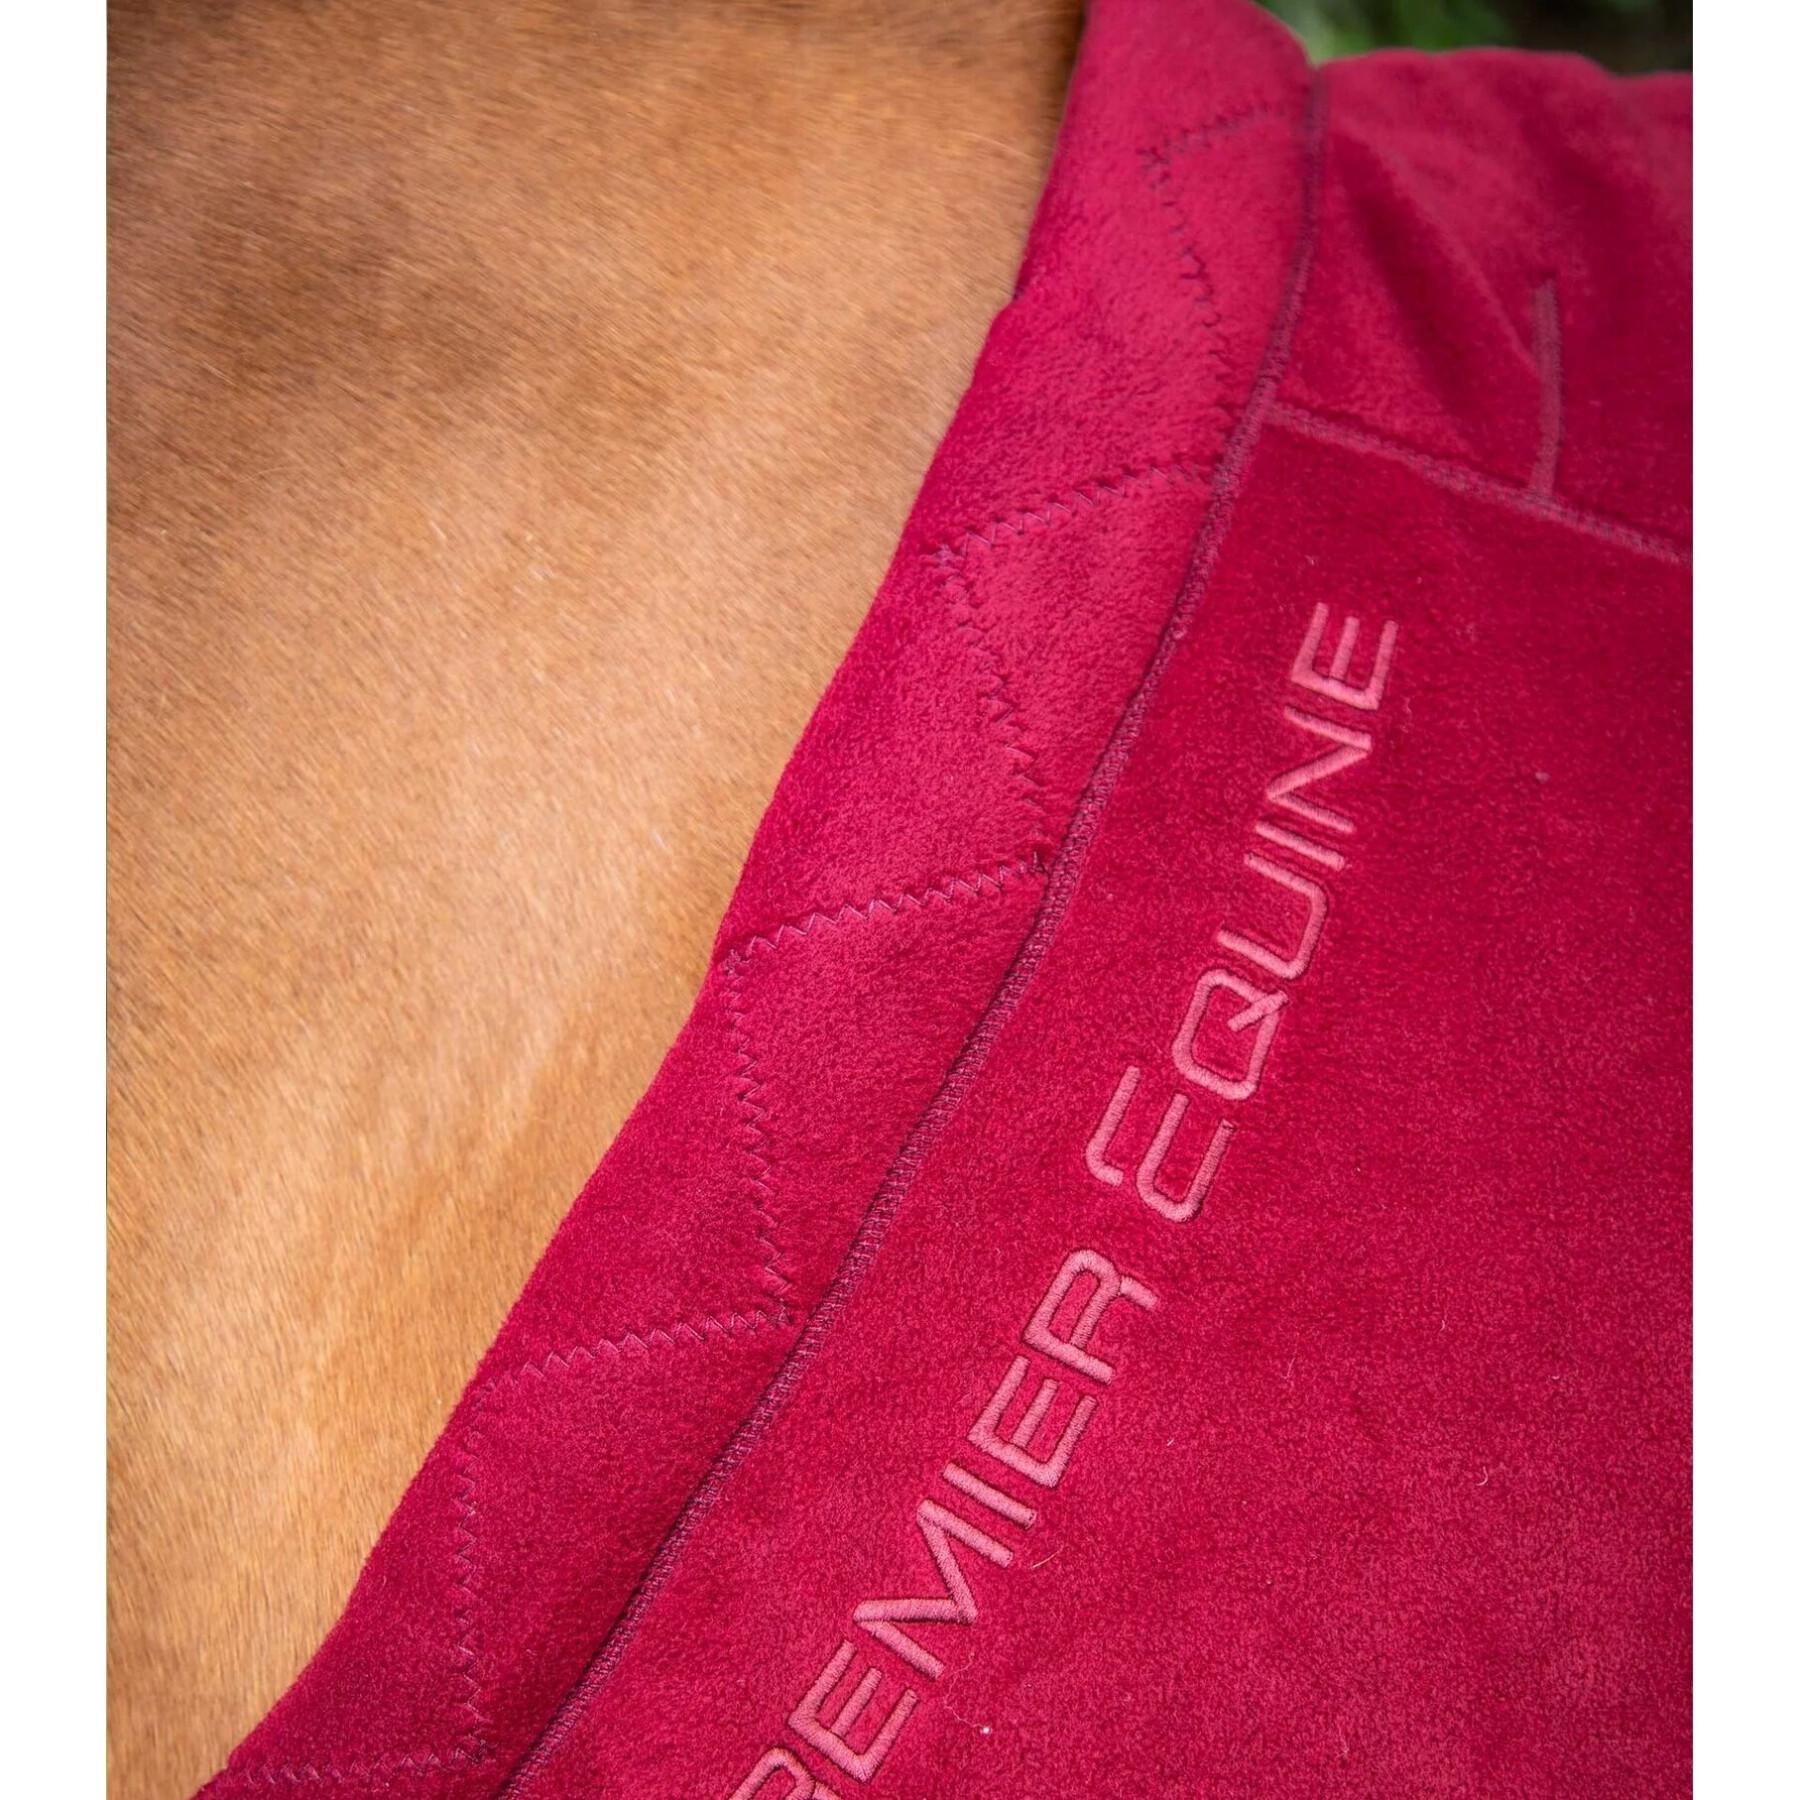 Coperta asciugante in pile per cavalli Premier Equine Buster Continental 280g